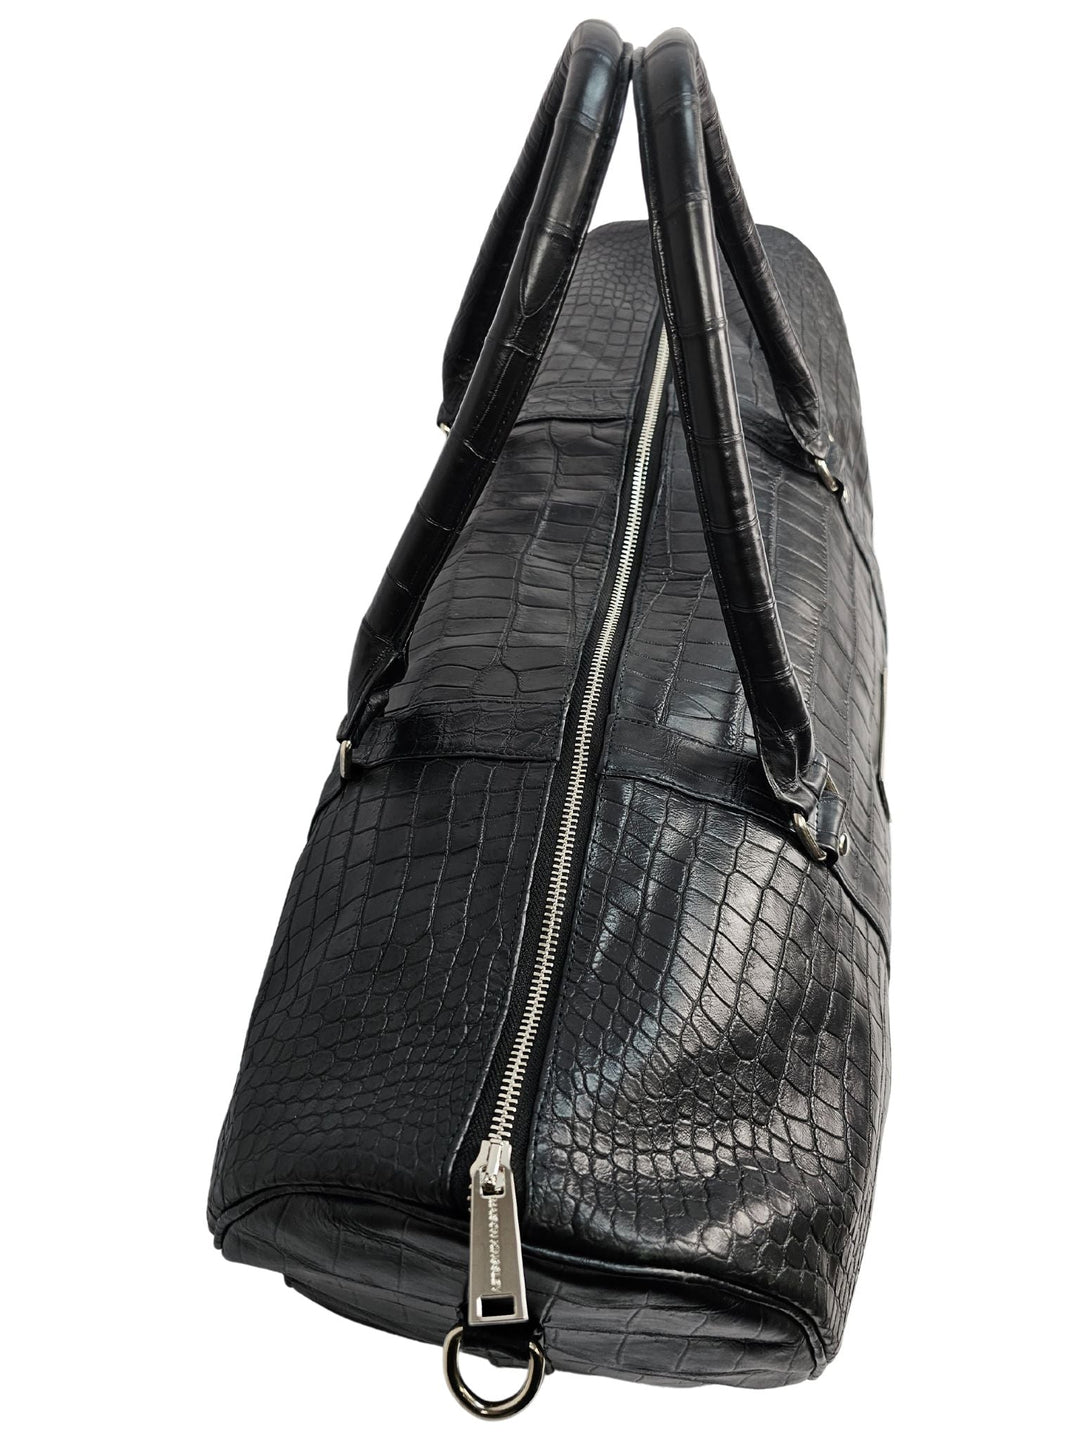 American Alligator Duffle Bag